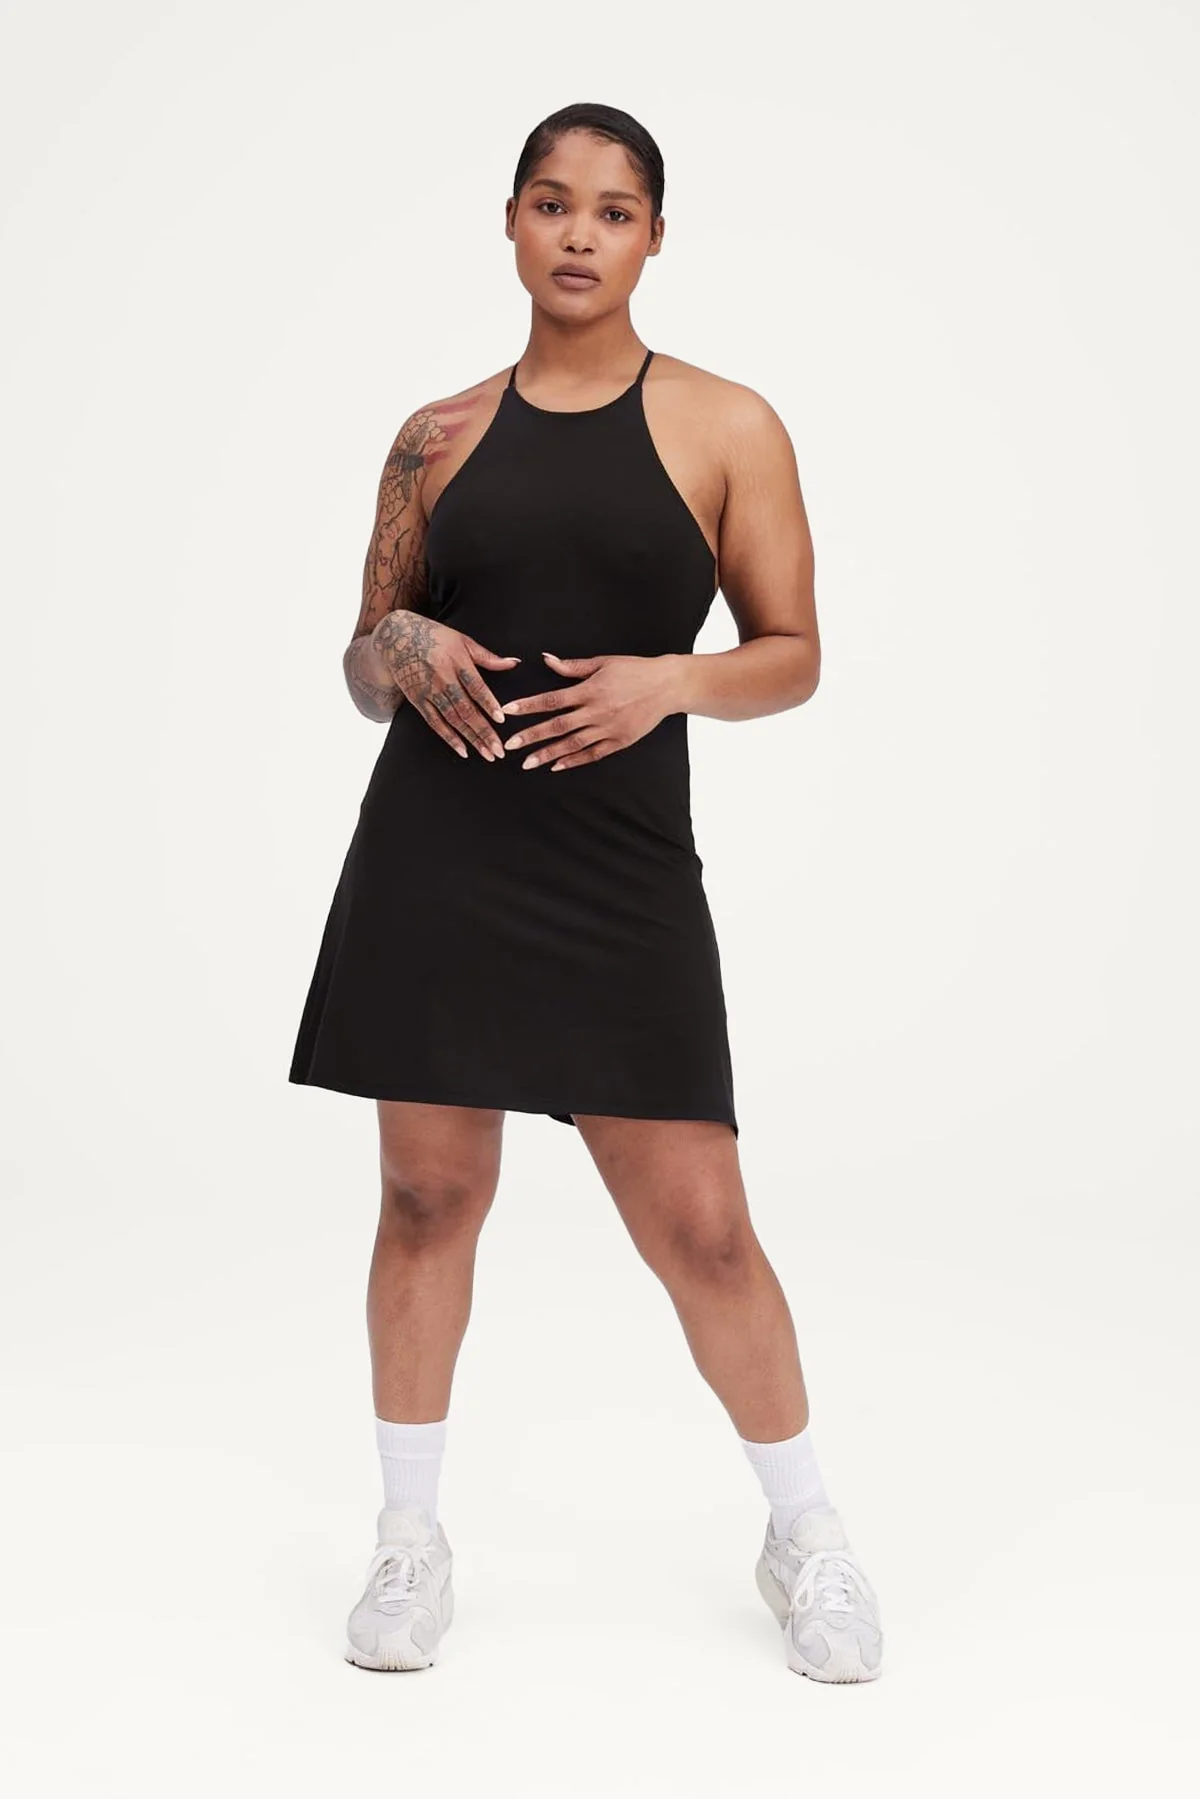 Girlfriend Collective + Black Naomi Workout Dress